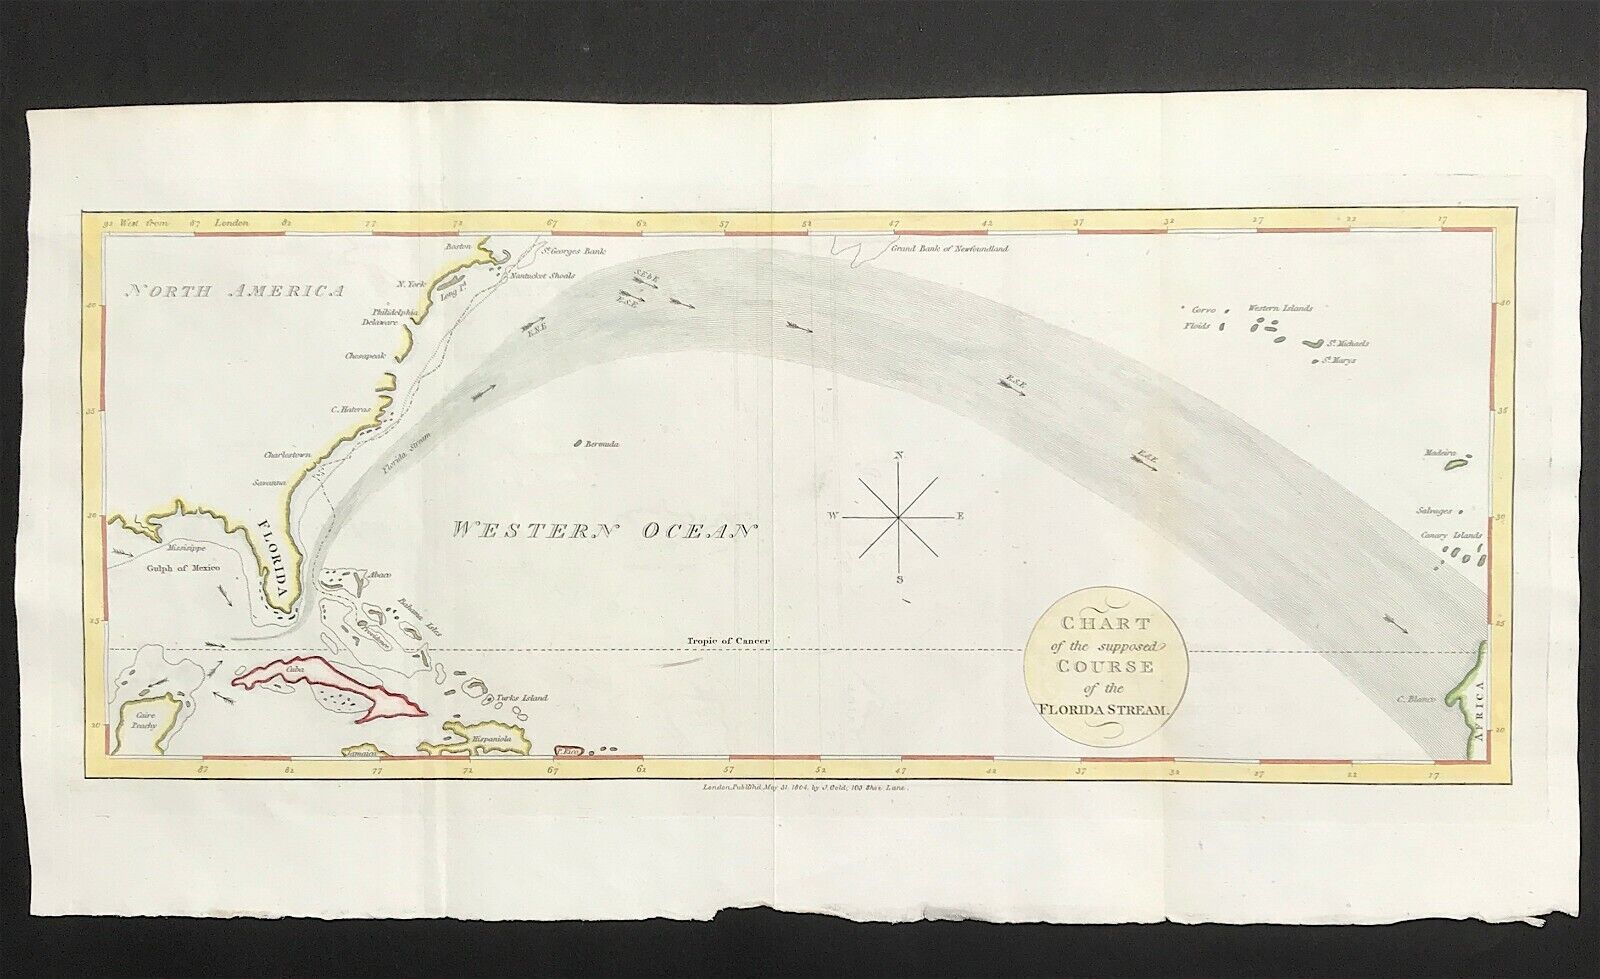 Gulf Stream Florida coast map c1804 original Chart of the supposed Course